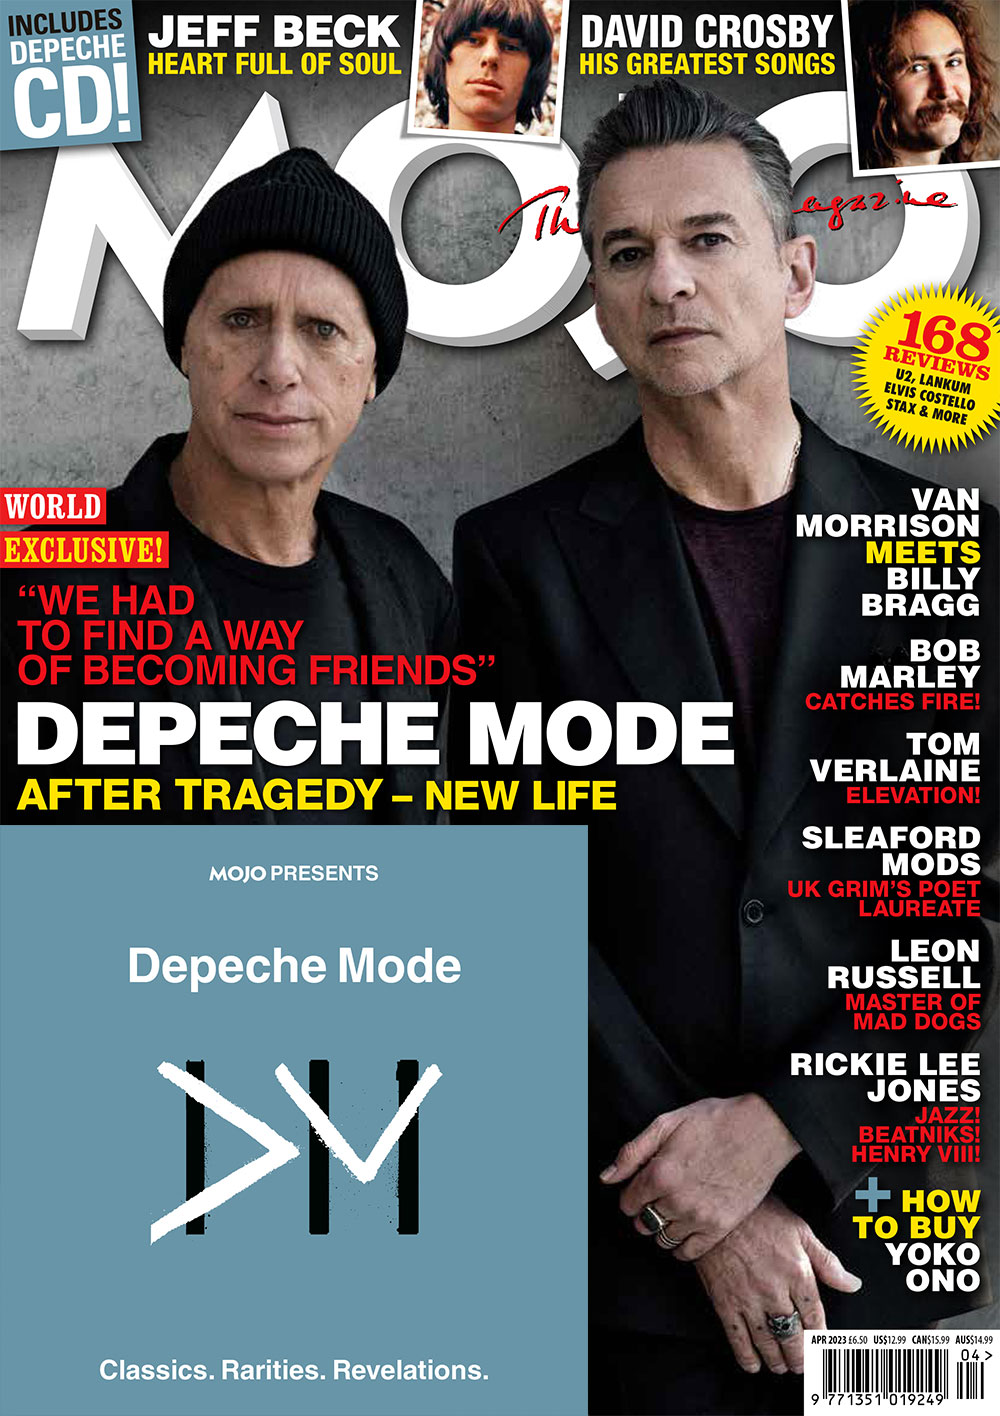  Depeche Mode - Memento Mori SIGNED print, RED LP, cd &  cassette[PREORDER] - auction details